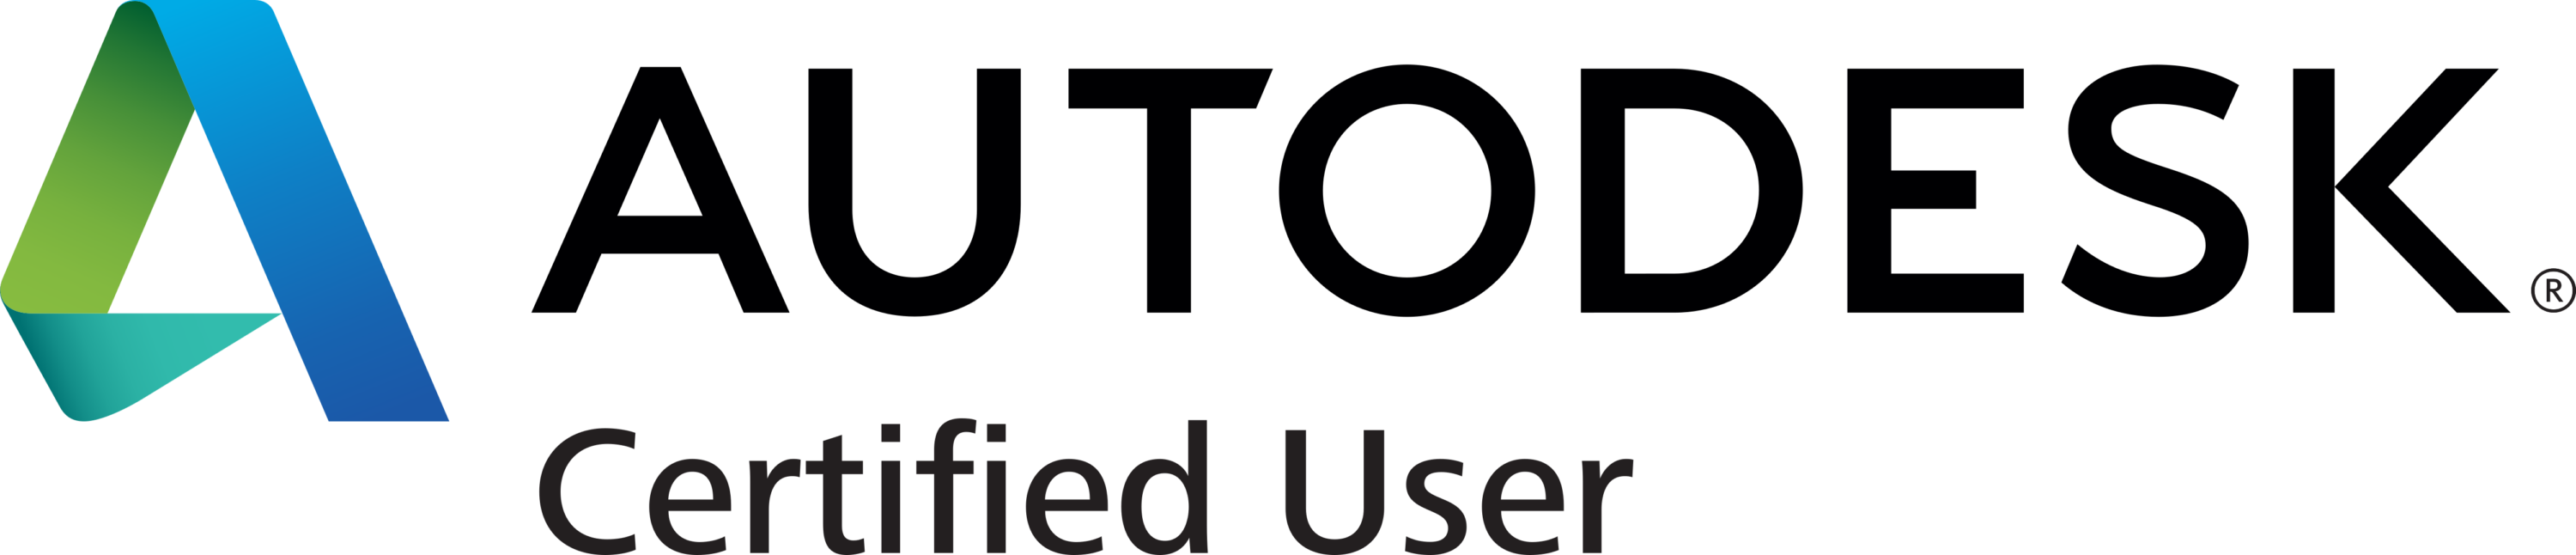 Autodesk slogan Logo 2013